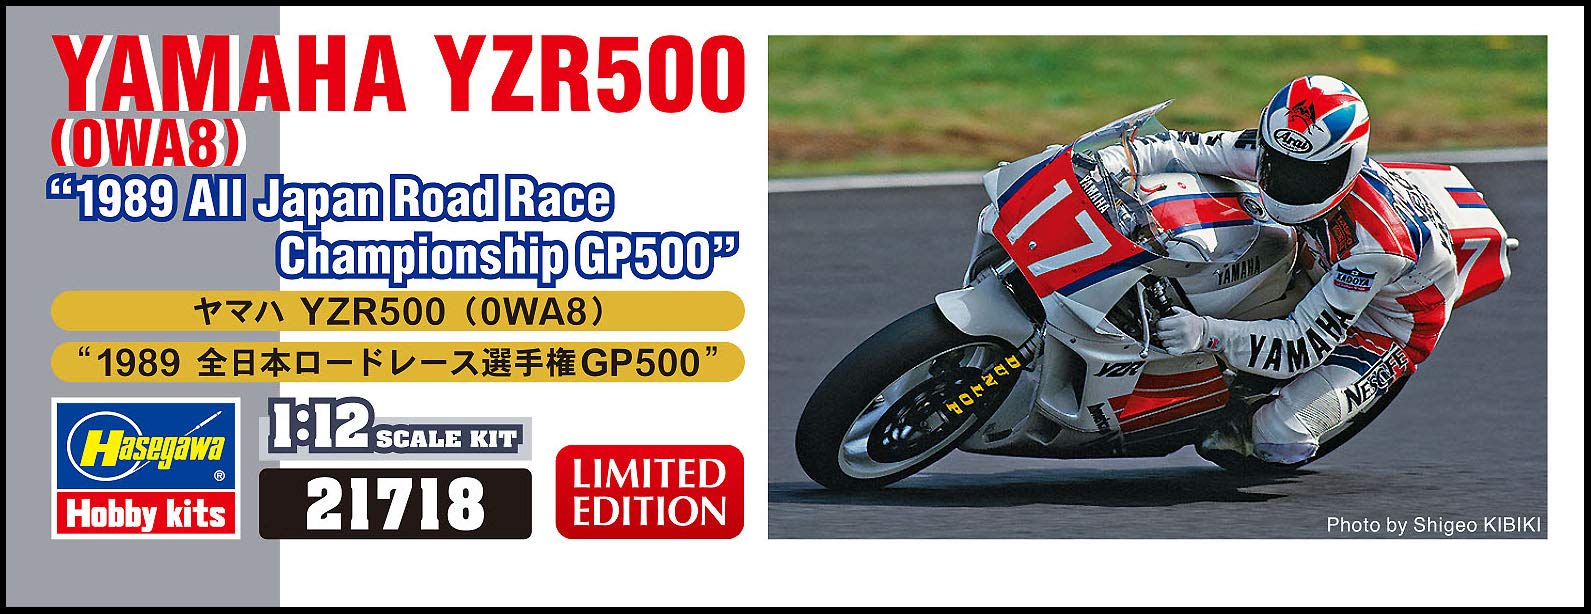 HASEGAWA 21718 Yamaha Yzr500 Owa8 '1989 All Japan Road Race Championship Gp500' 1/12 Scale Kit